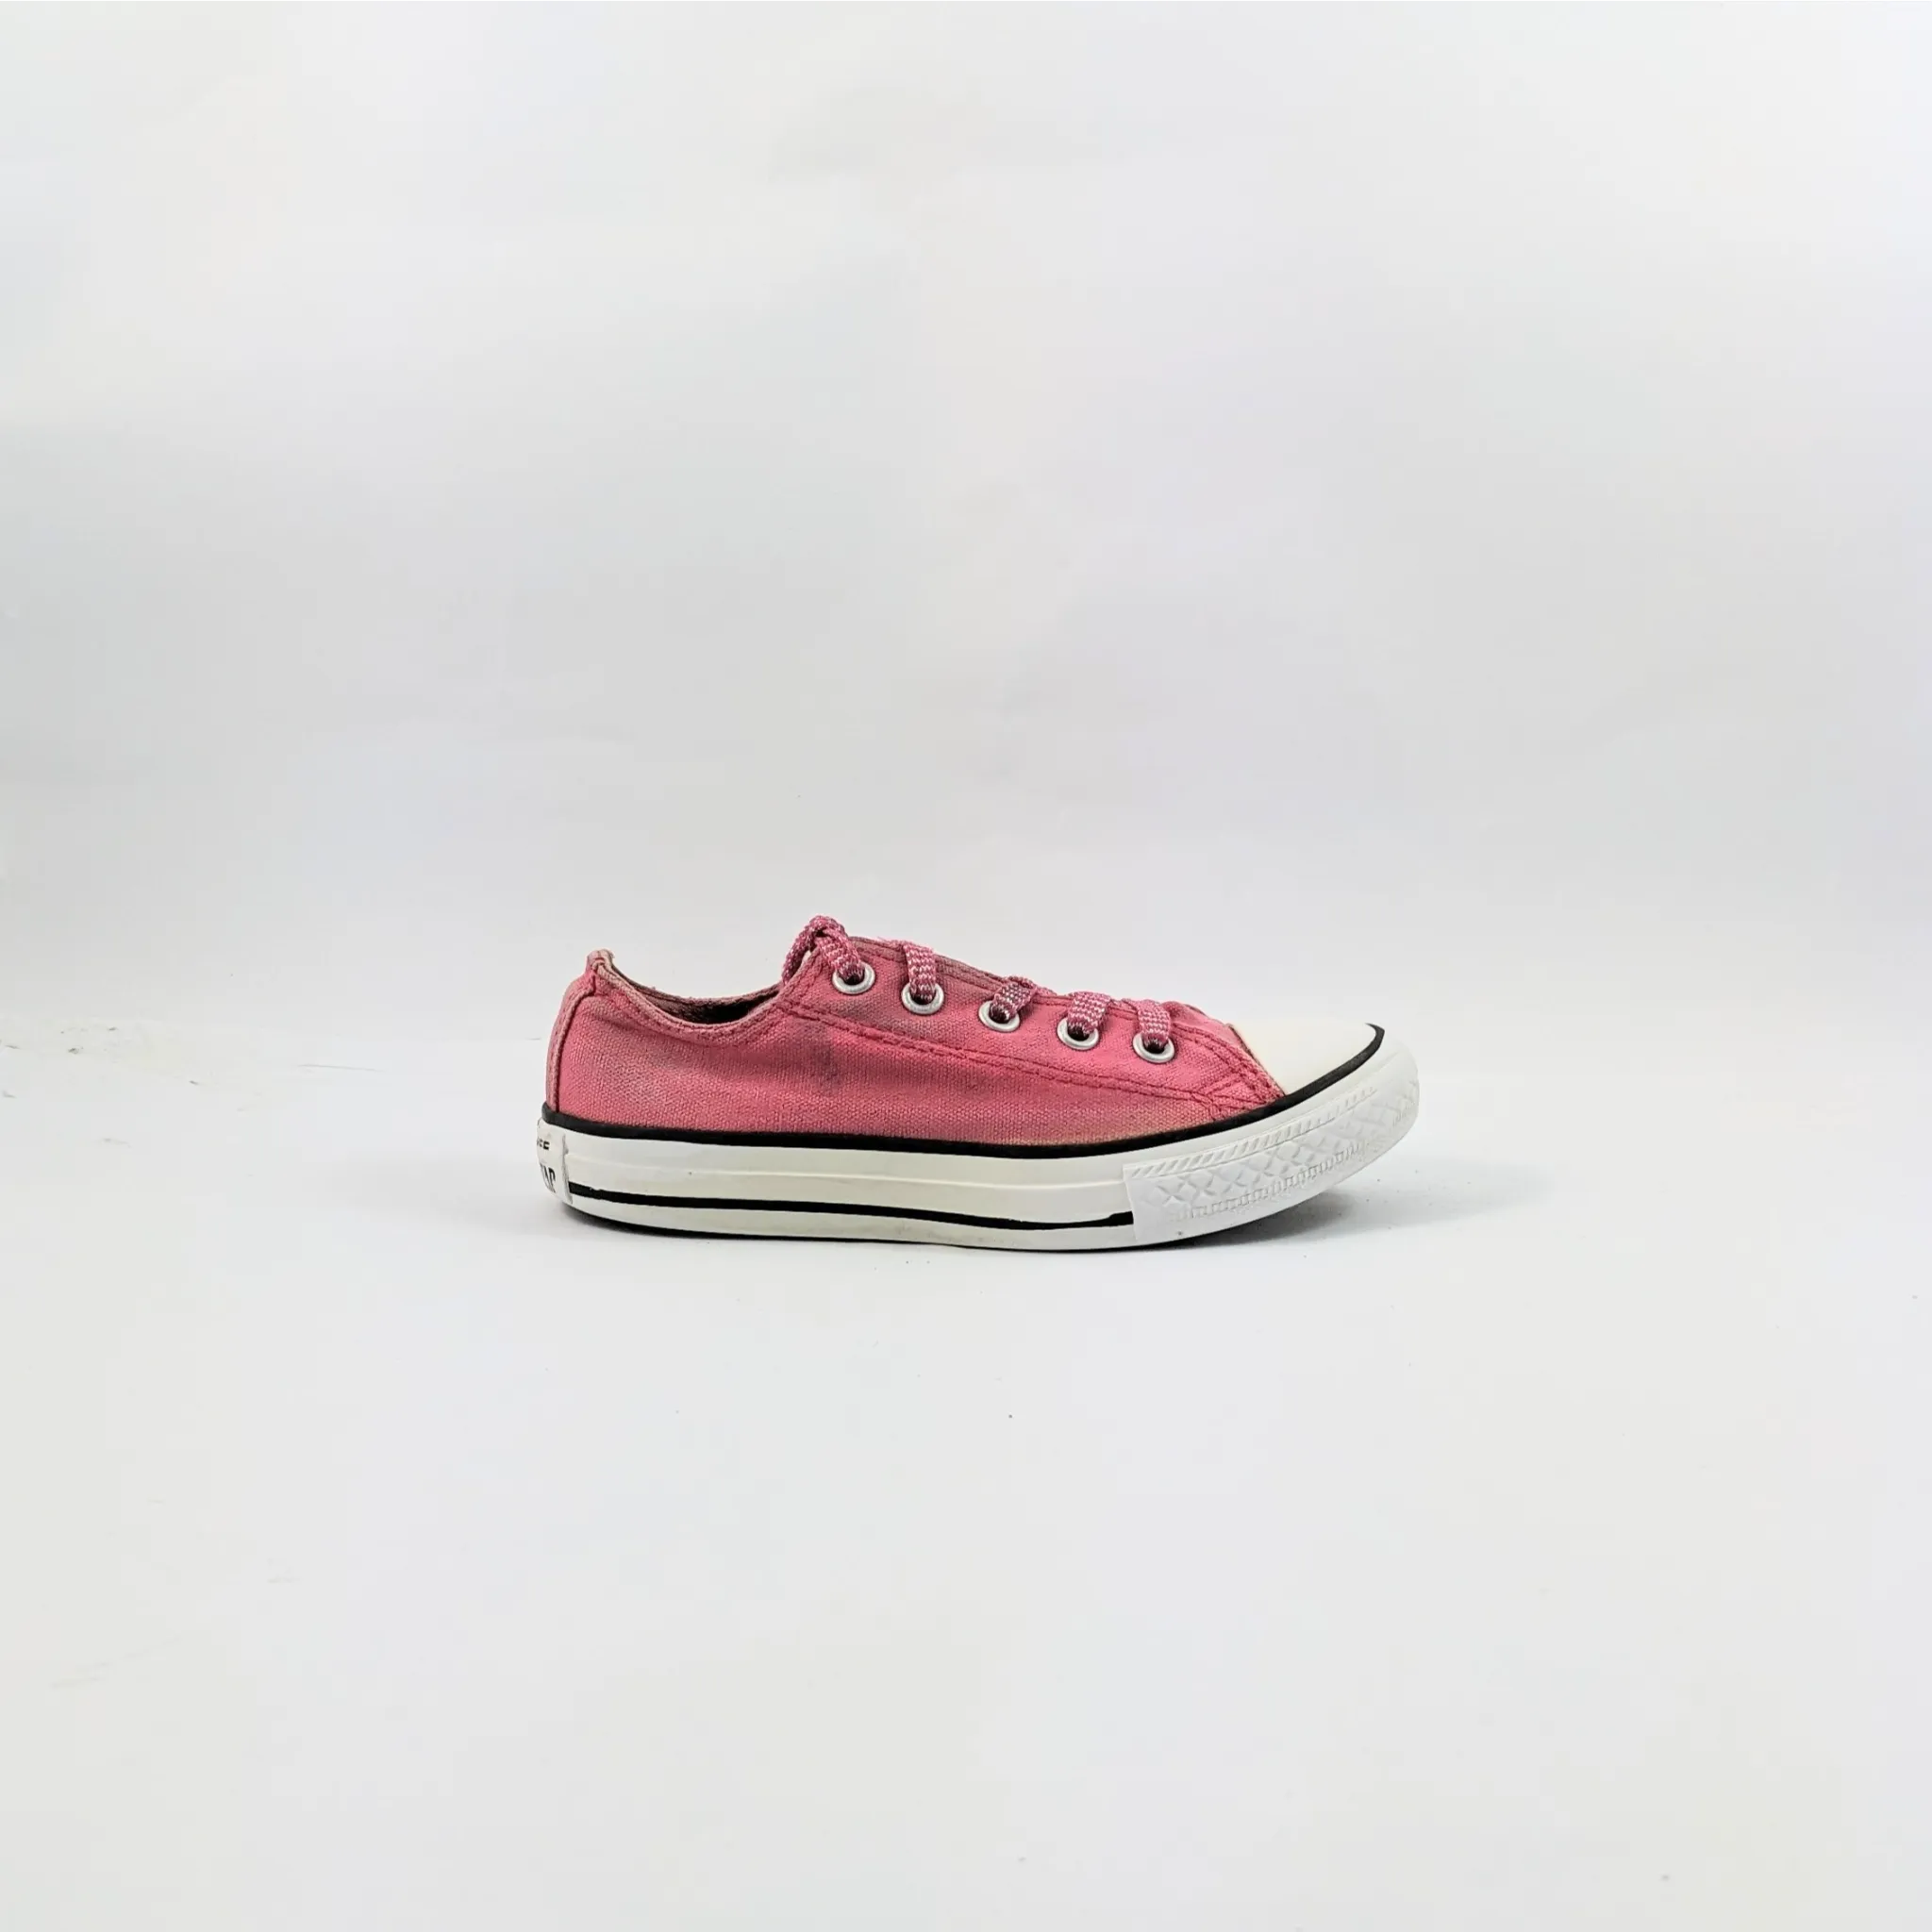 Converse Pink Sneakes